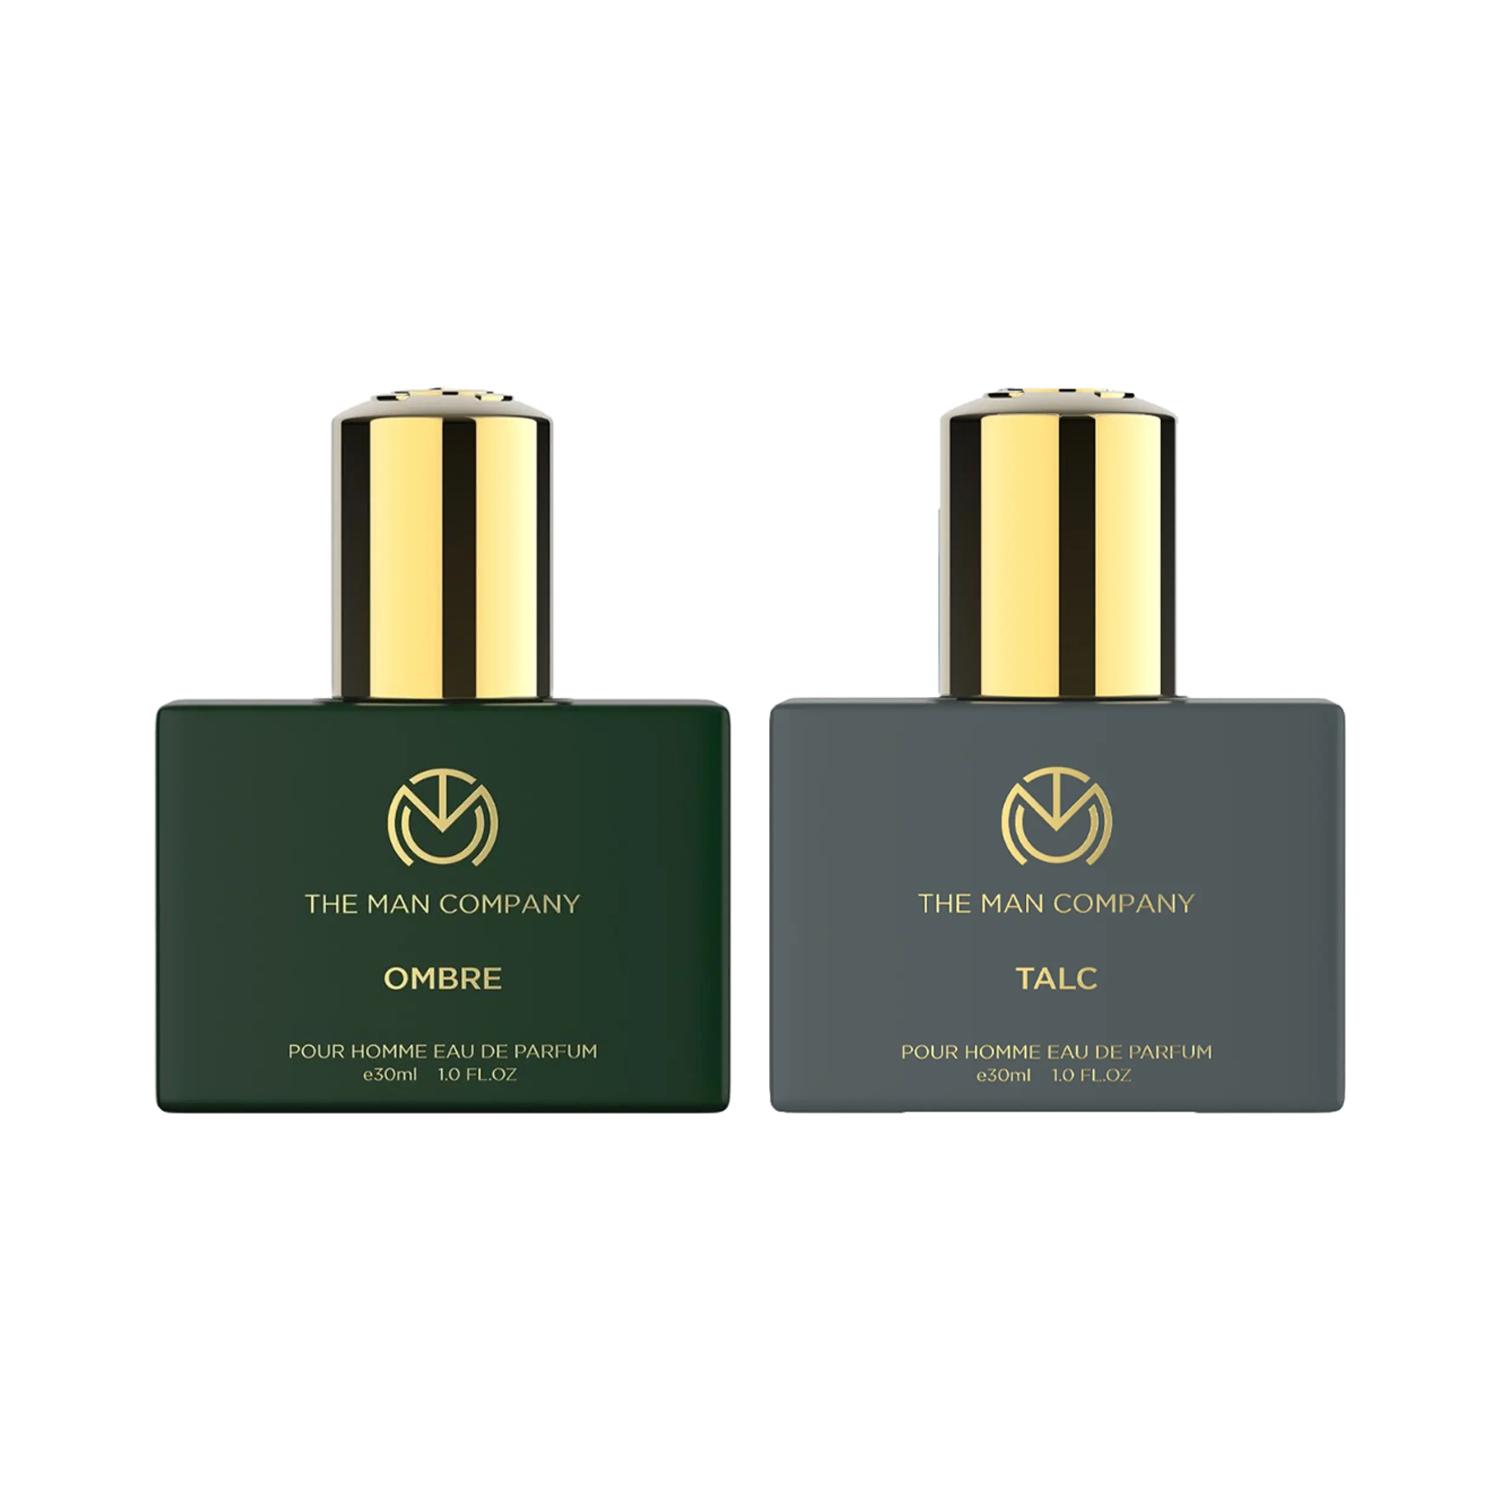 The Man Company Perfume Duo